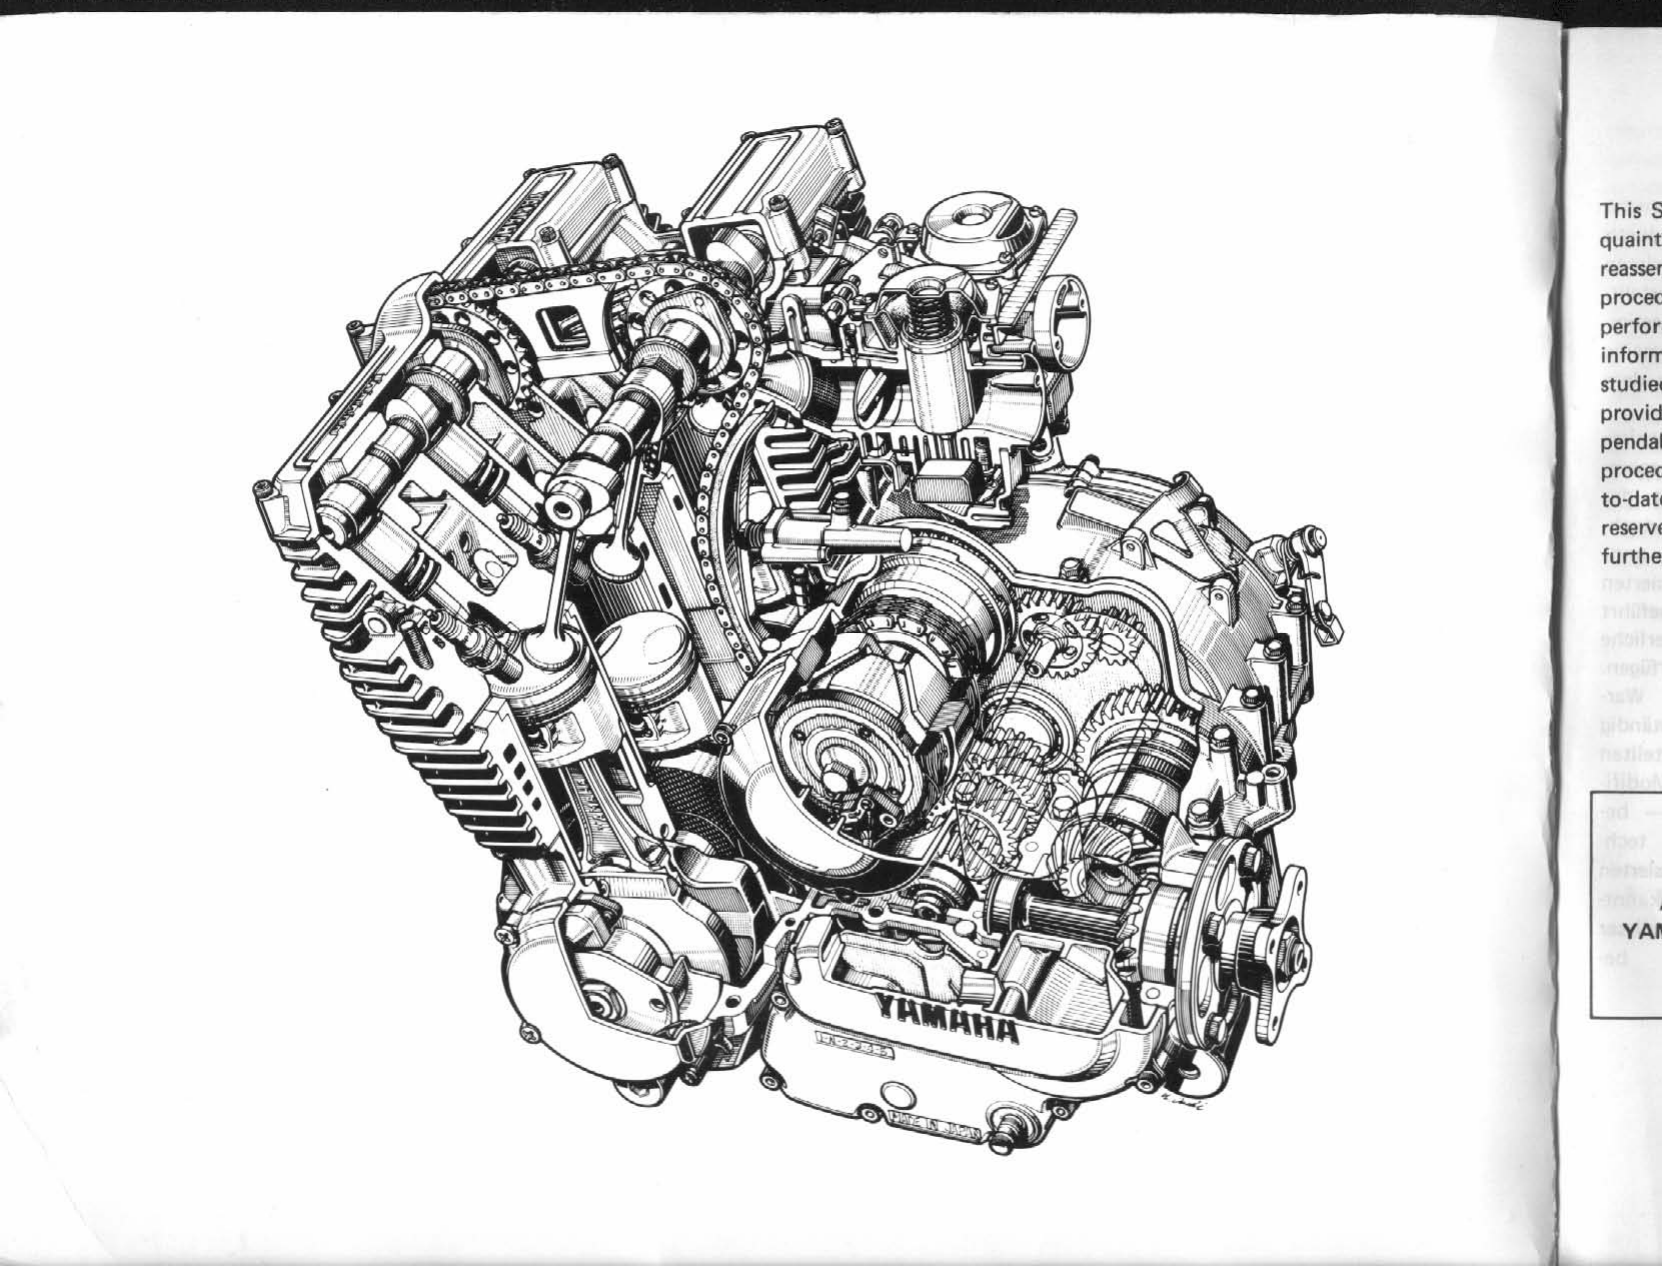 1980-1985 Yamaha XJ650 Maxim Turbo Seca service manual Preview image 2